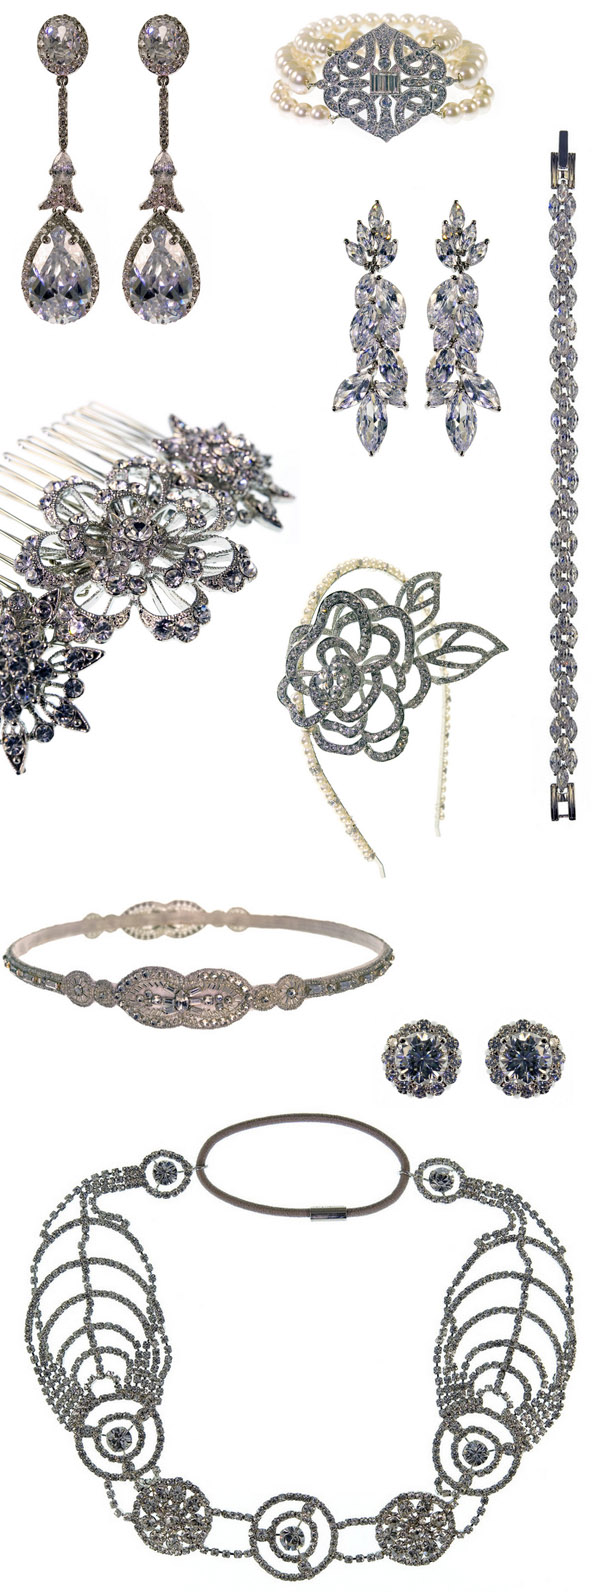 Millany Bridal Jewelry and Accessories | via junebugweddings.com